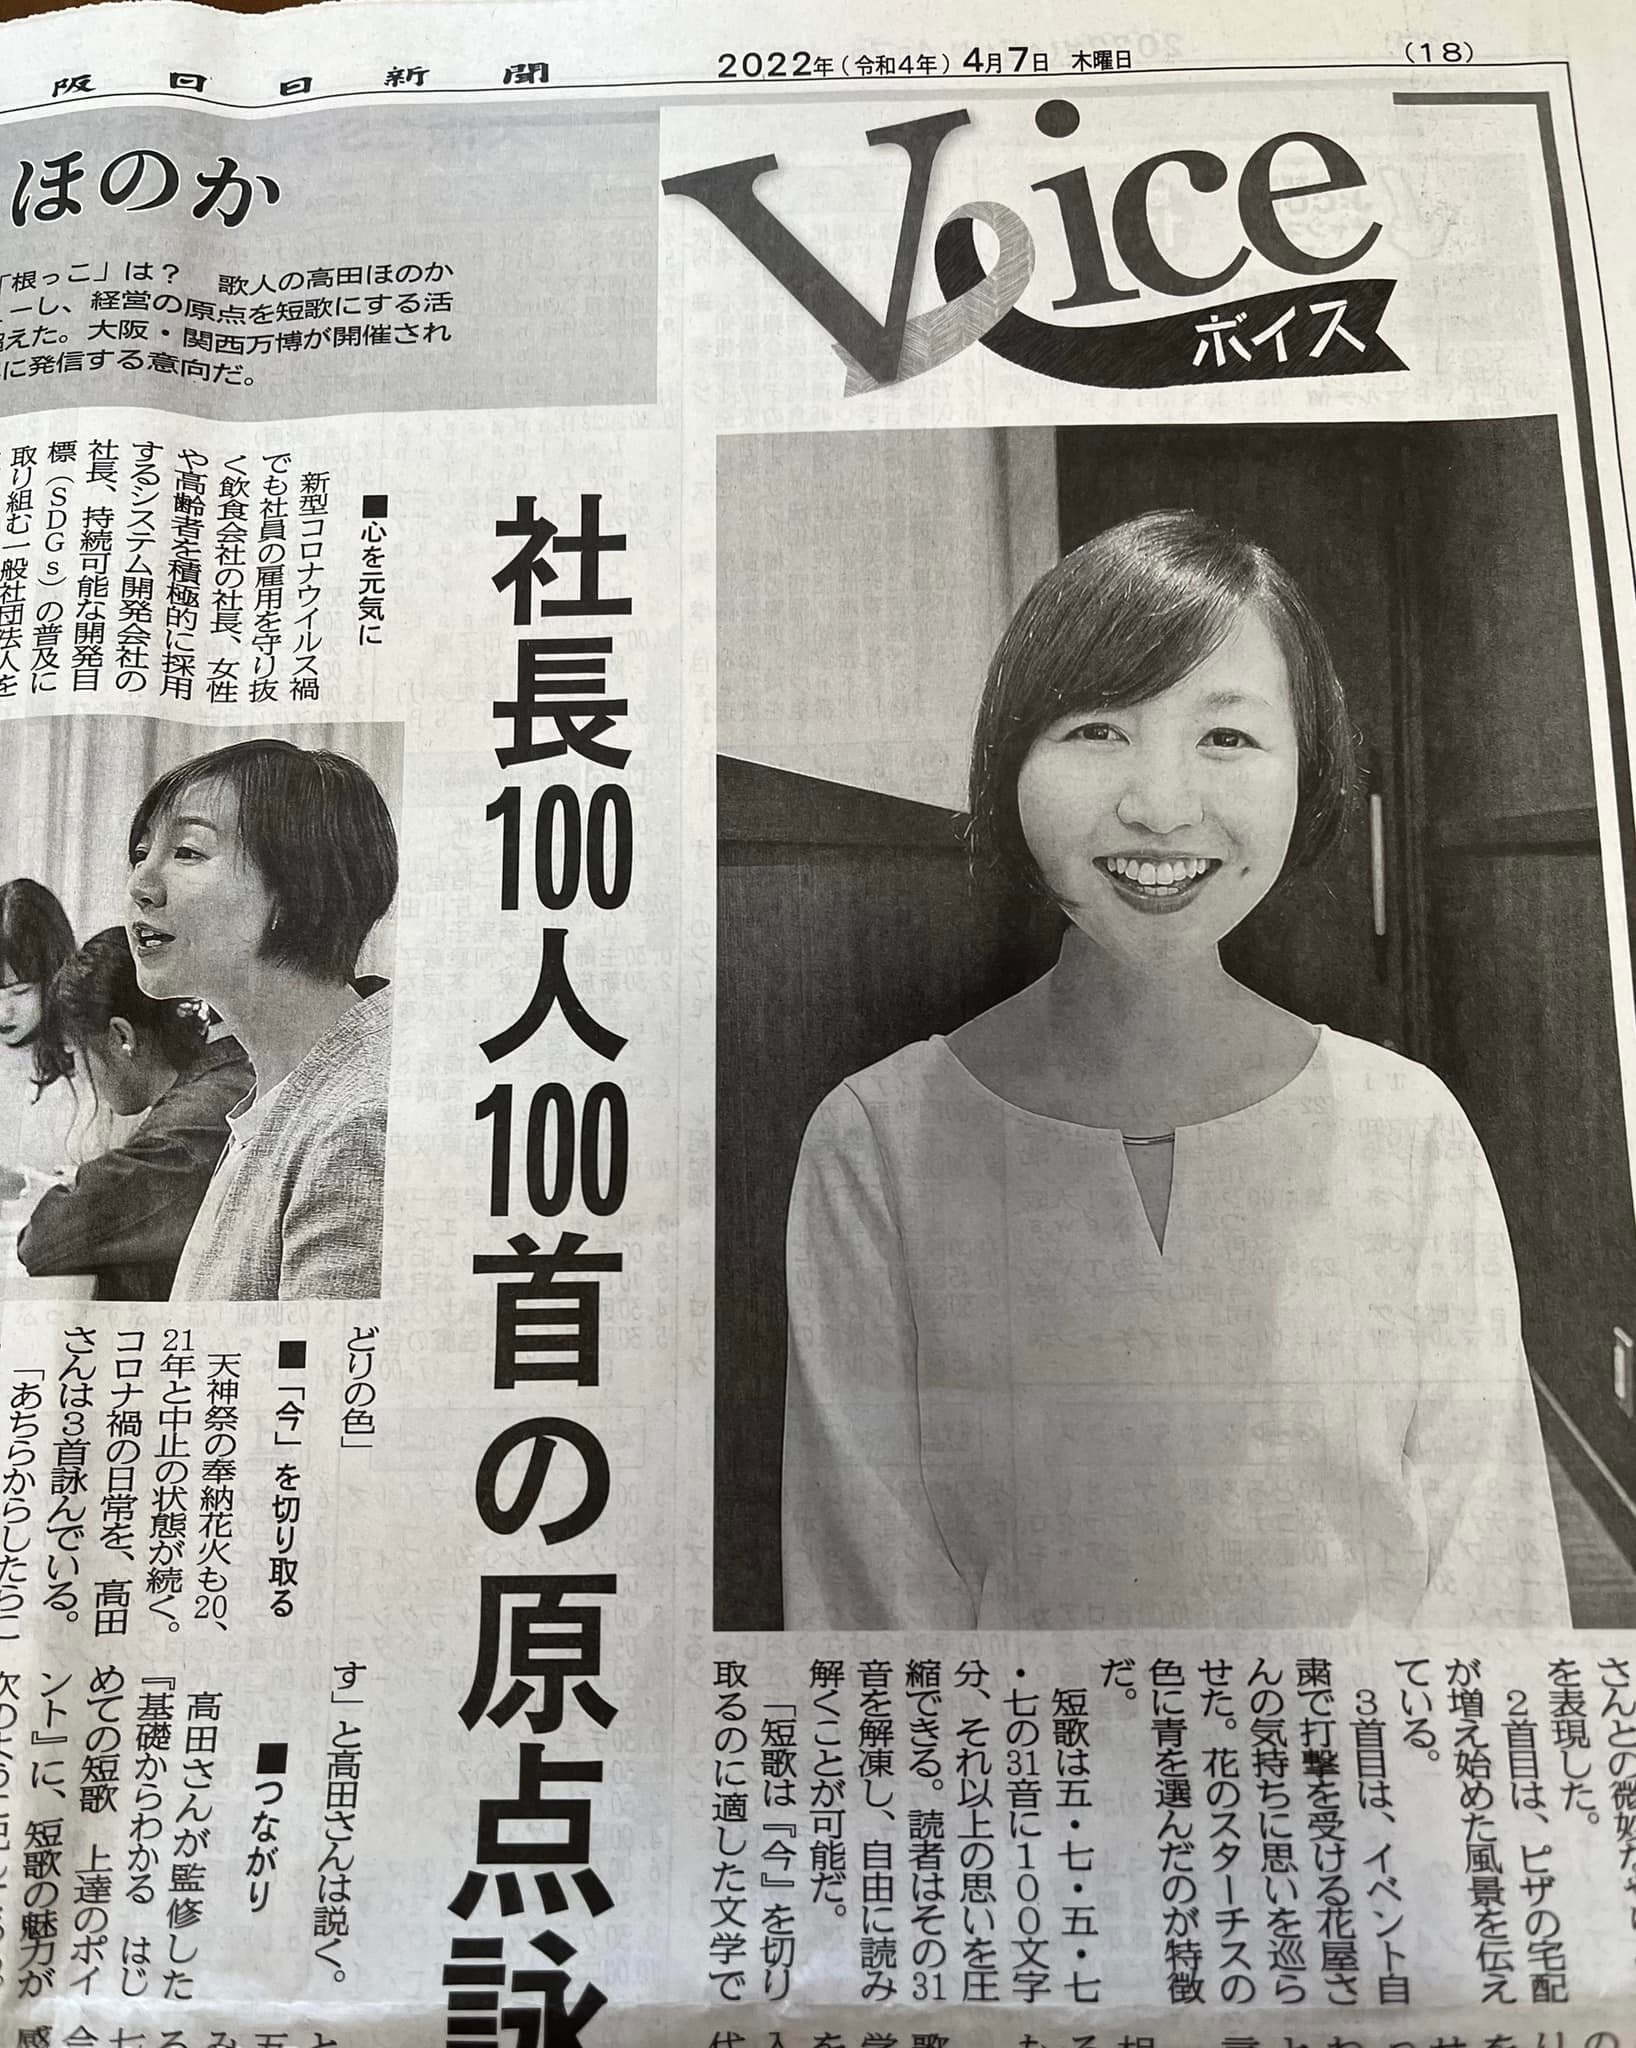 大阪日日新聞「Voice」に掲載